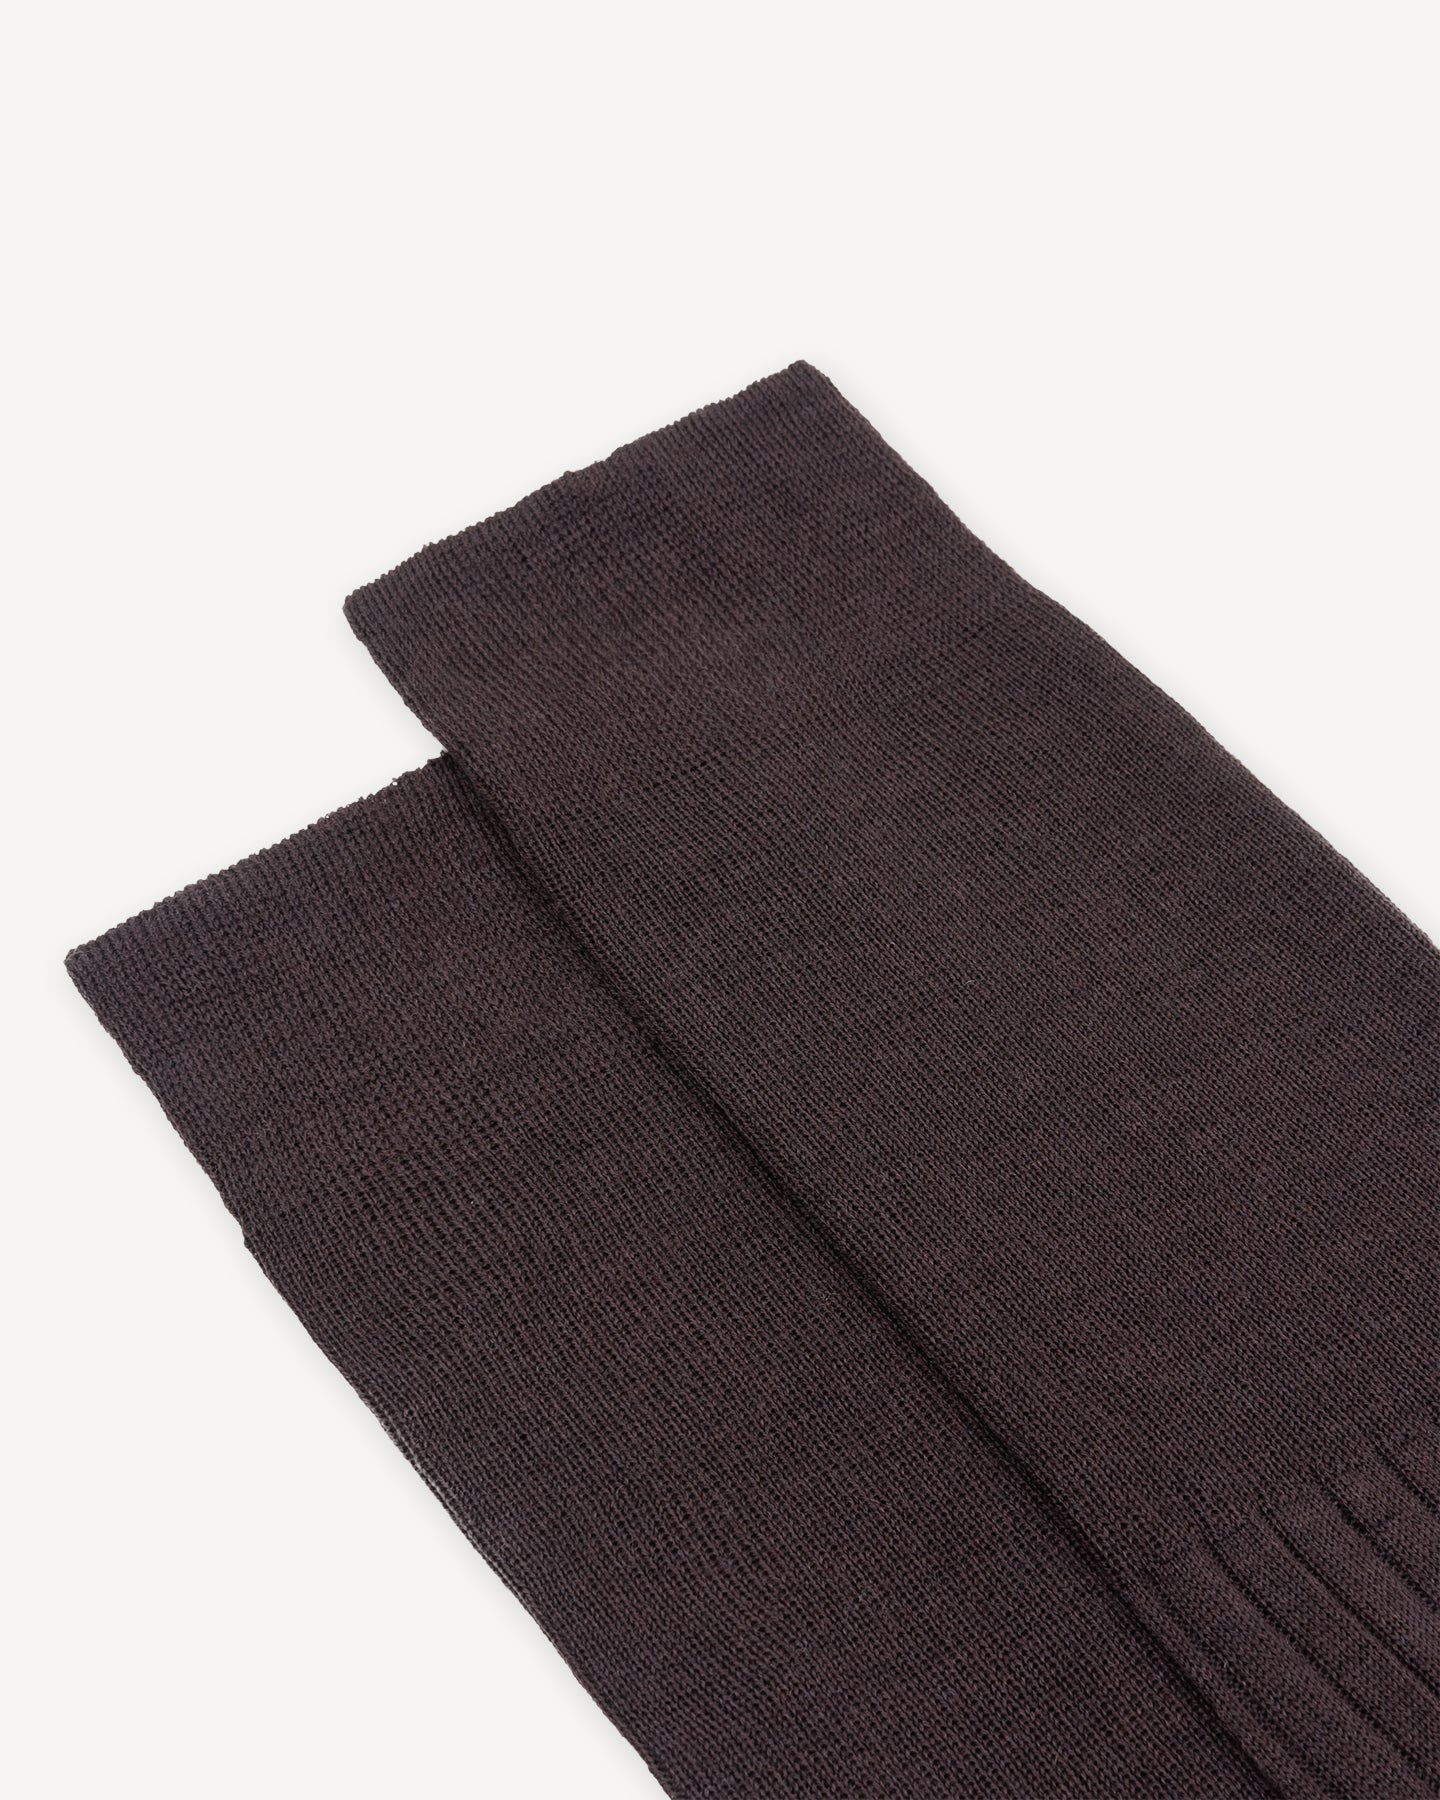 Brown knee high socks made from Australian merino wool